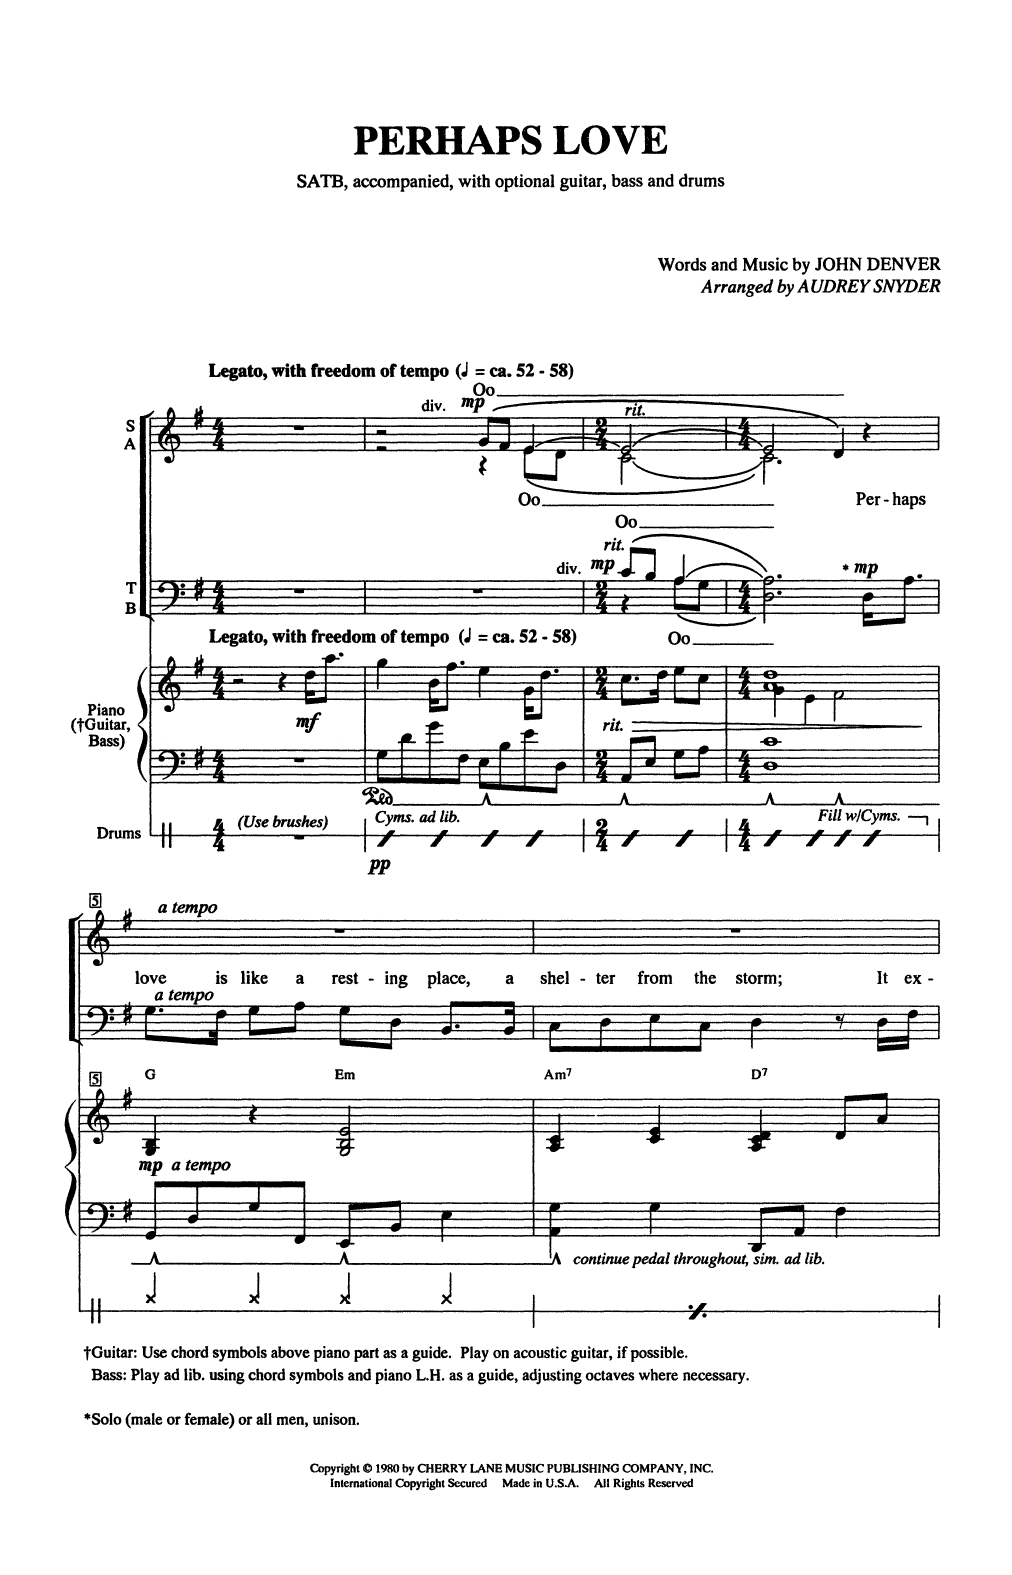 John Denver Perhaps Love (arr. Audrey Snyder) Sheet Music Notes & Chords for SATB Choir - Download or Print PDF